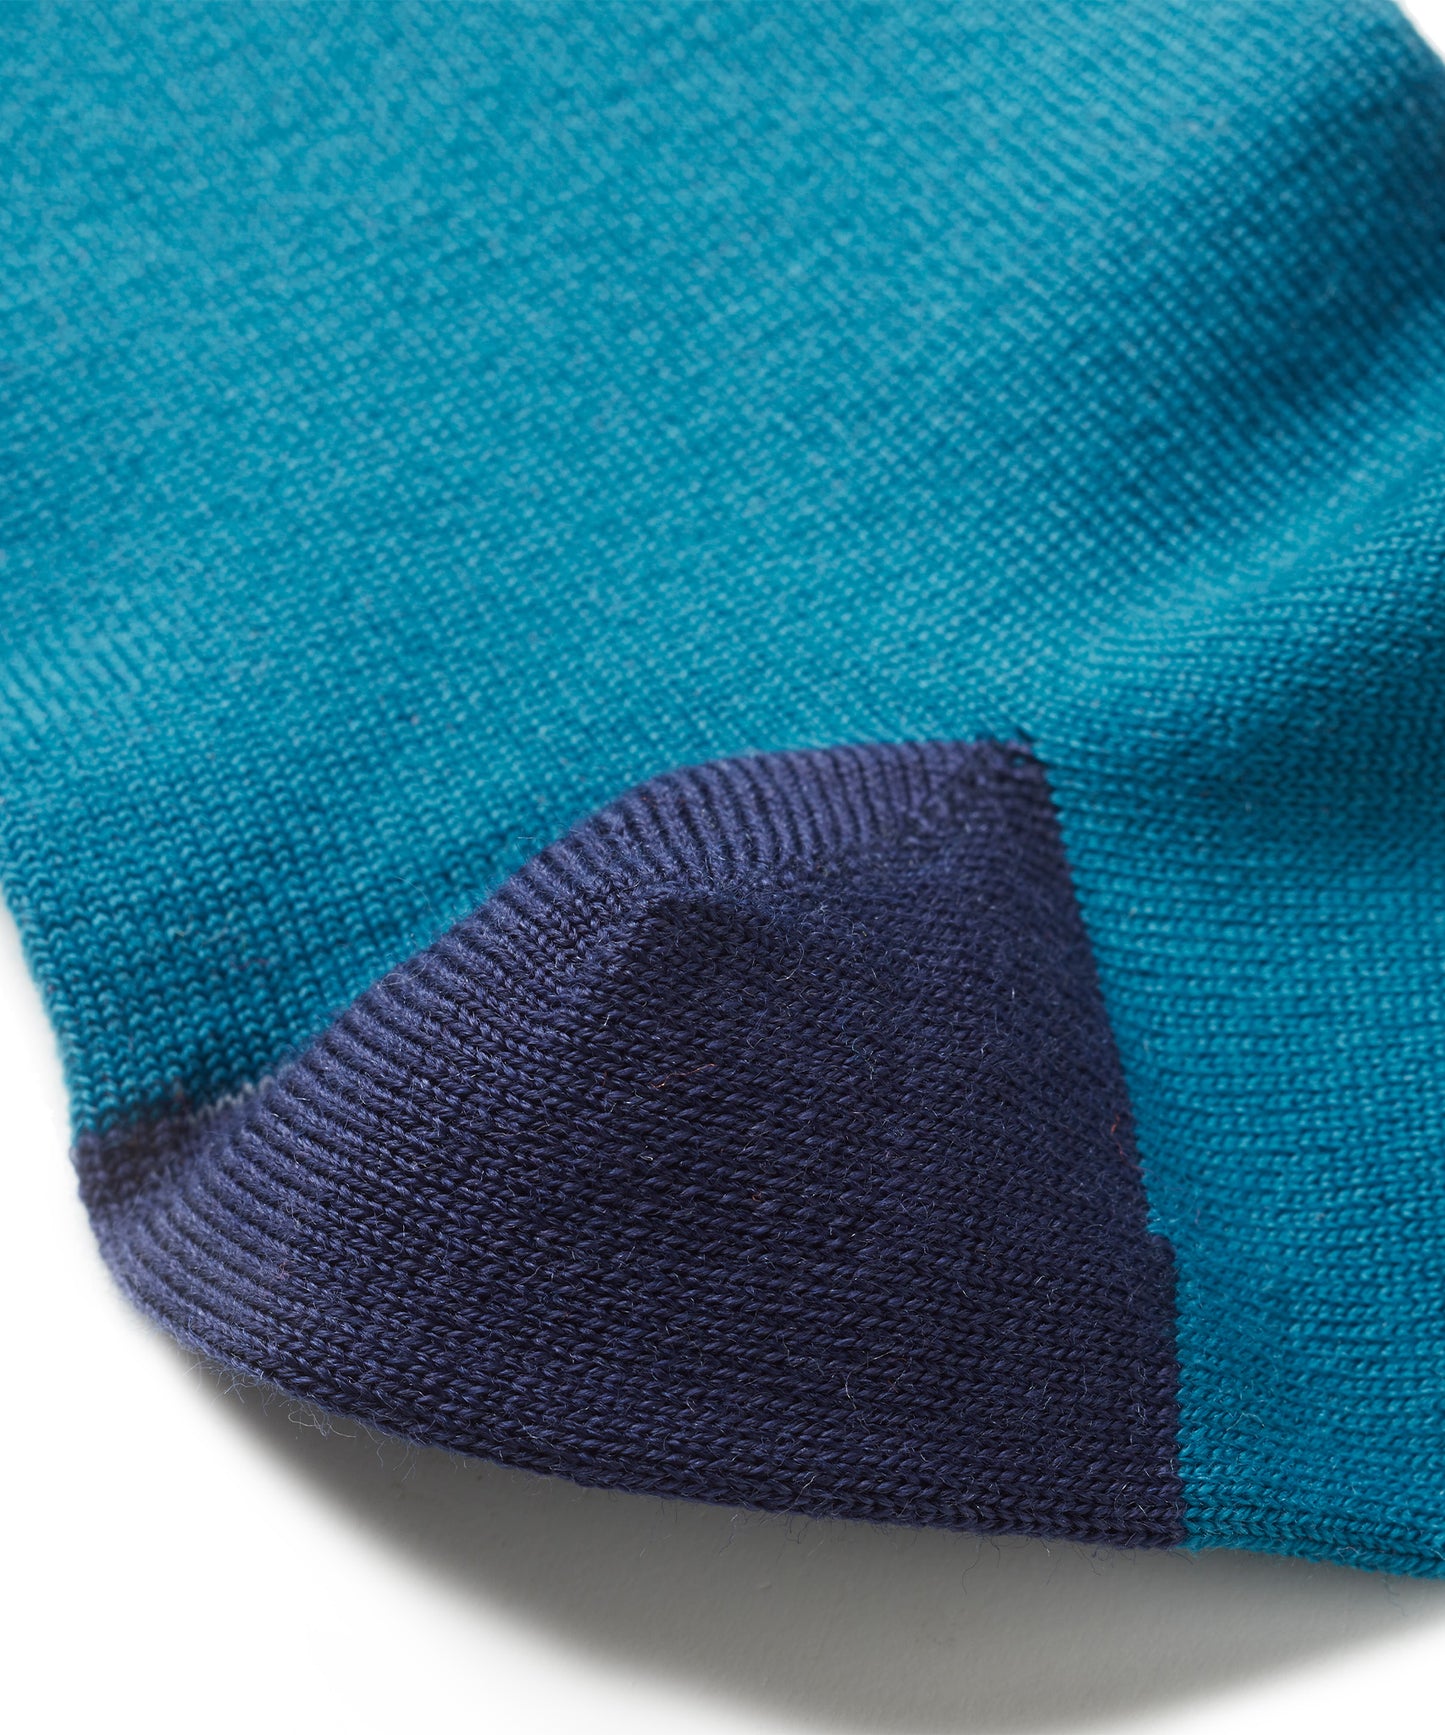 FINDRA Merino Colour Block Socks Teal